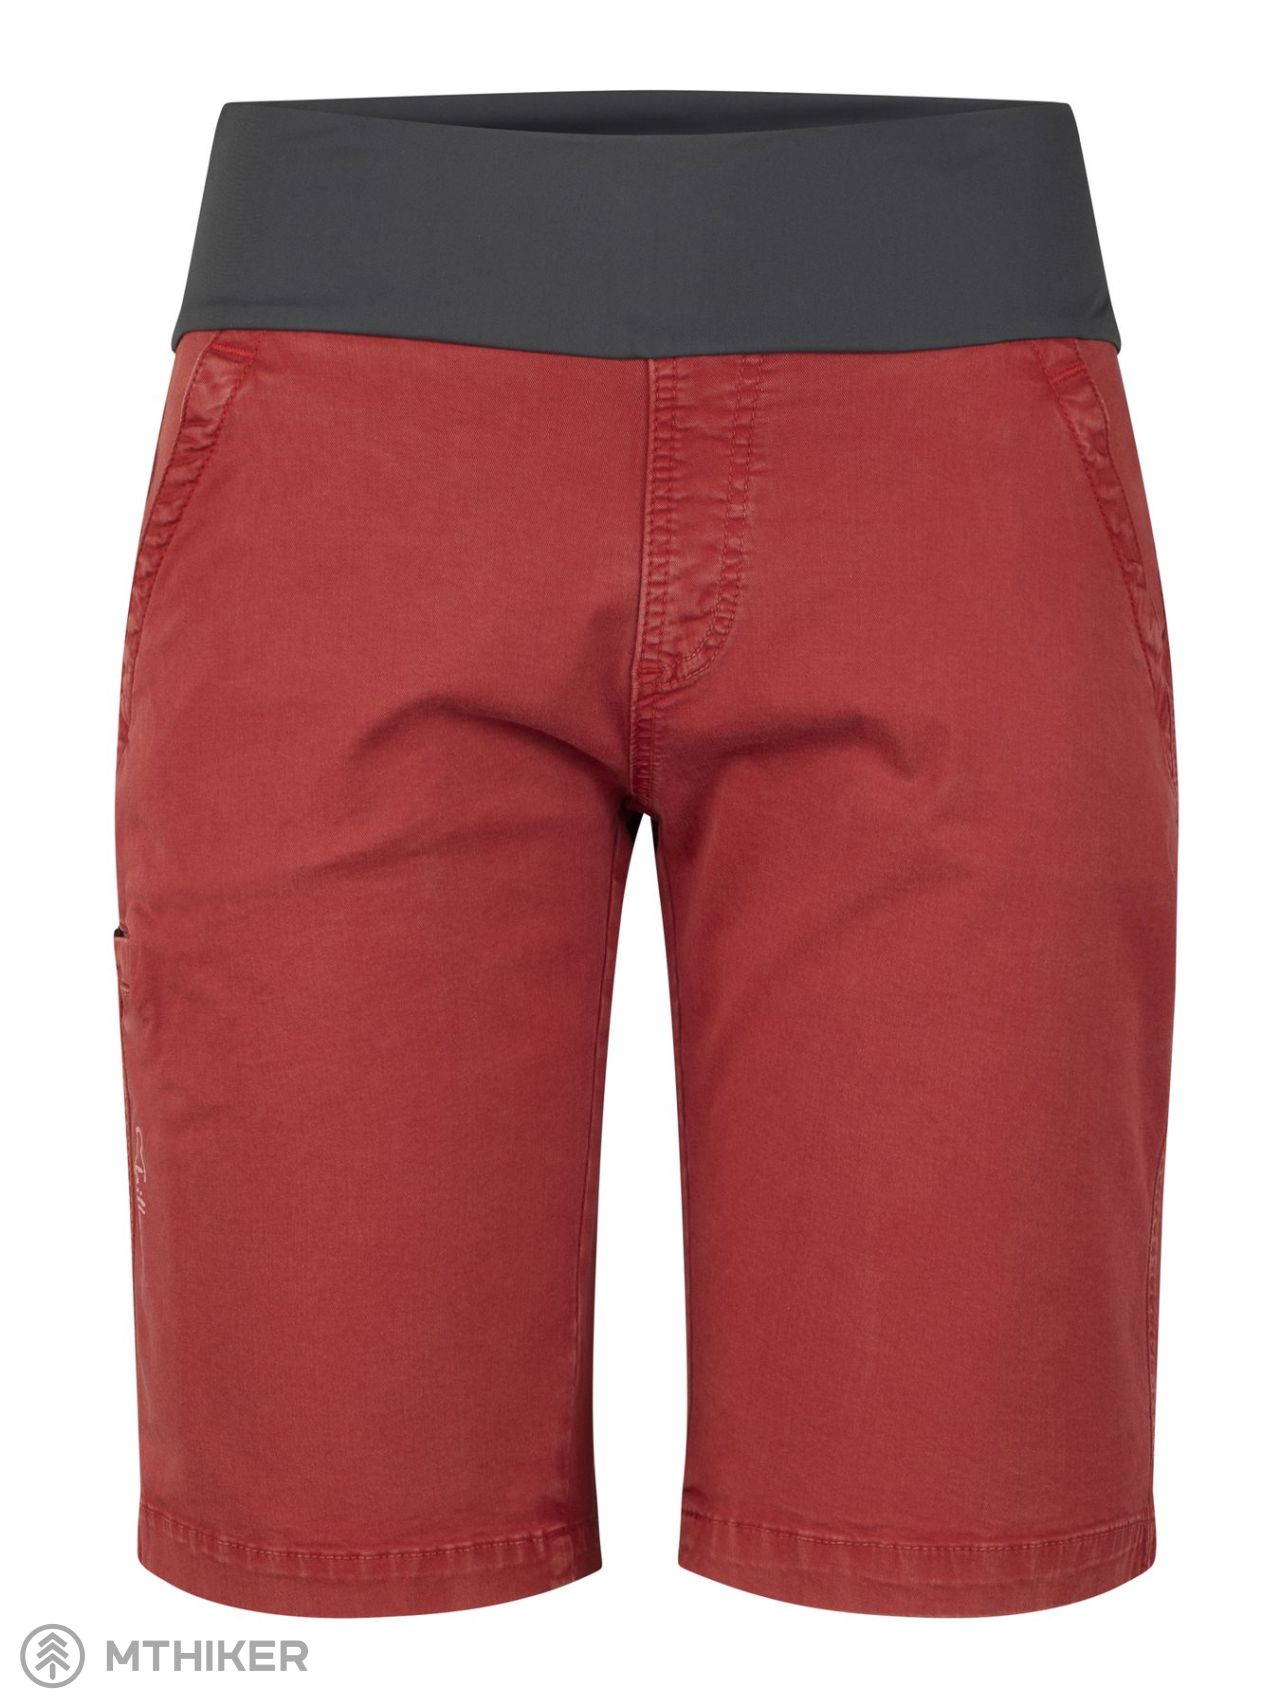 Chillaz SANDRA 2.0-BRICK RED women&#39;s shorts, brick red